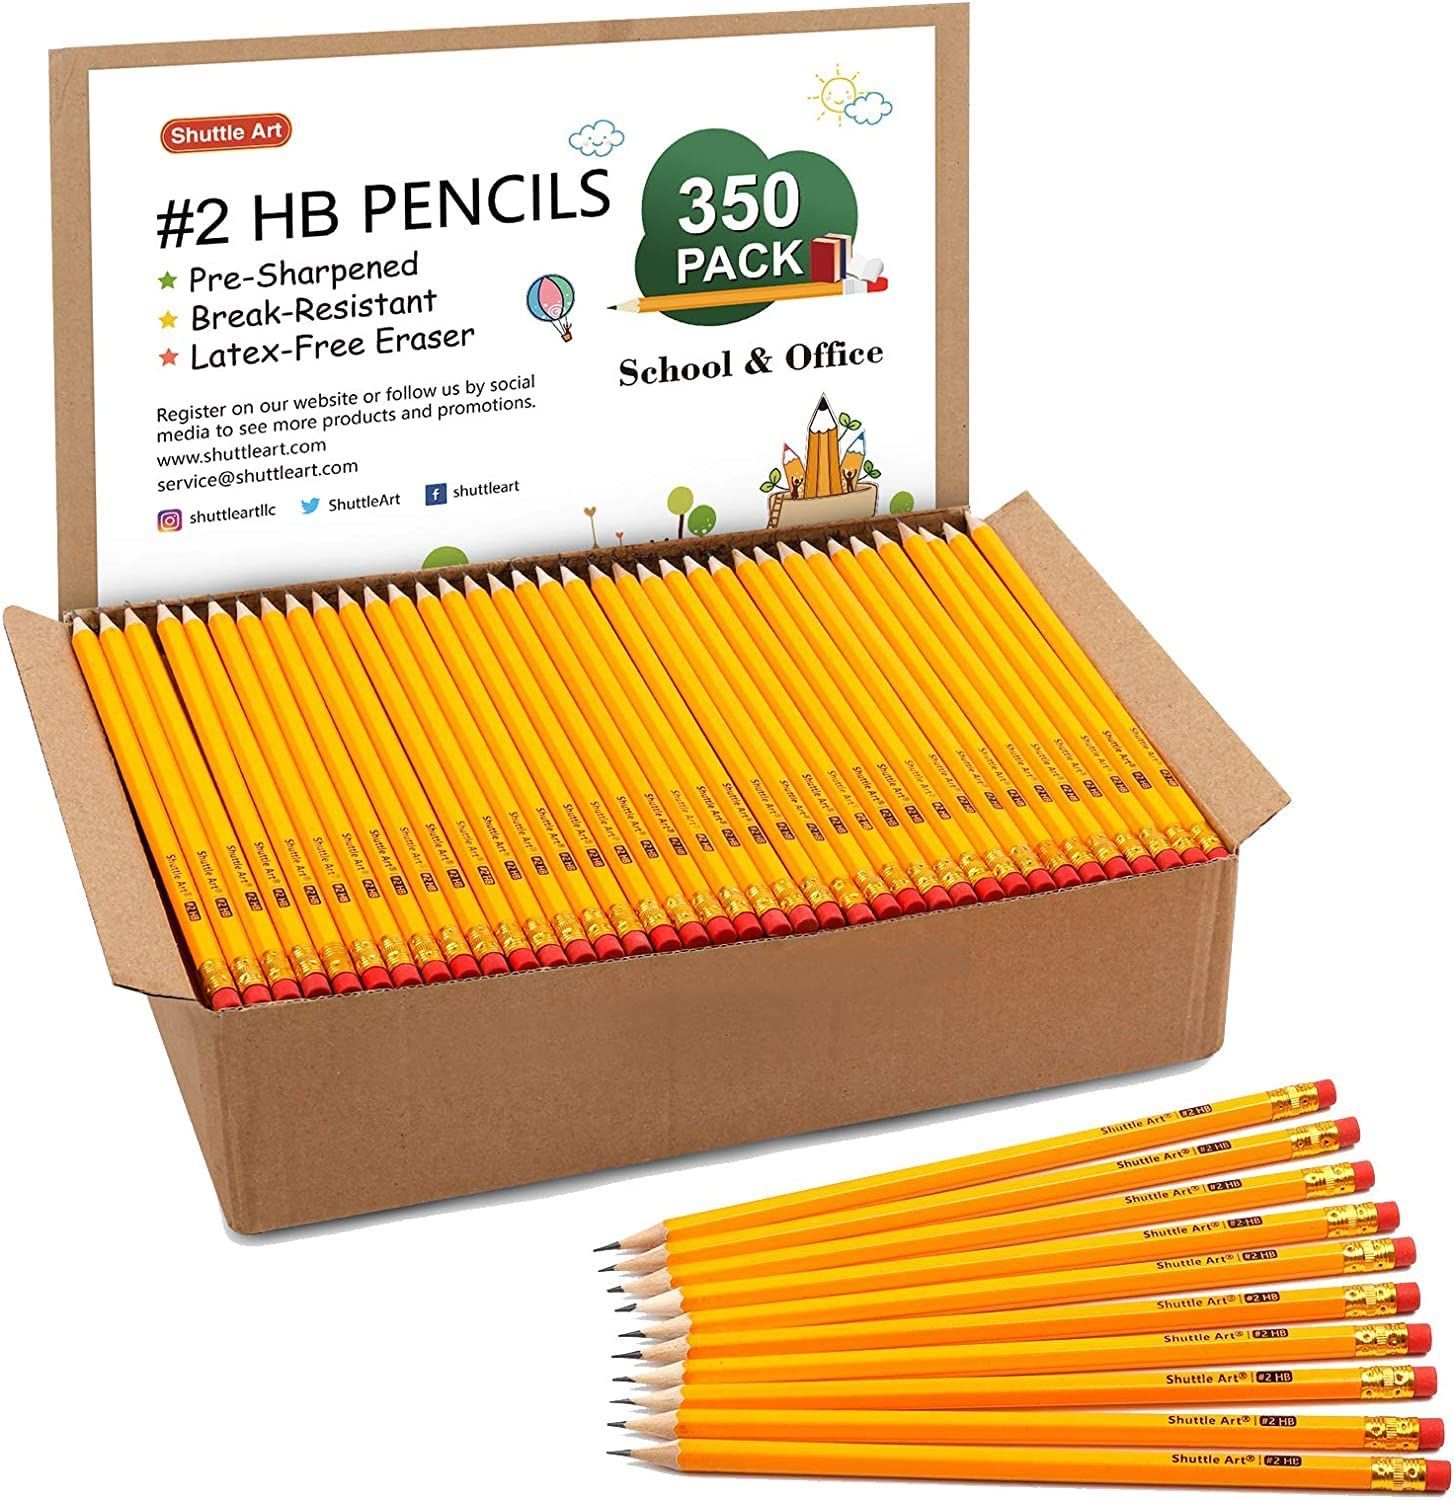 Shuttle Art 鉛筆 かきかた鉛筆 HB #2 350本セット 黄色 標準鉛筆 無地 ...